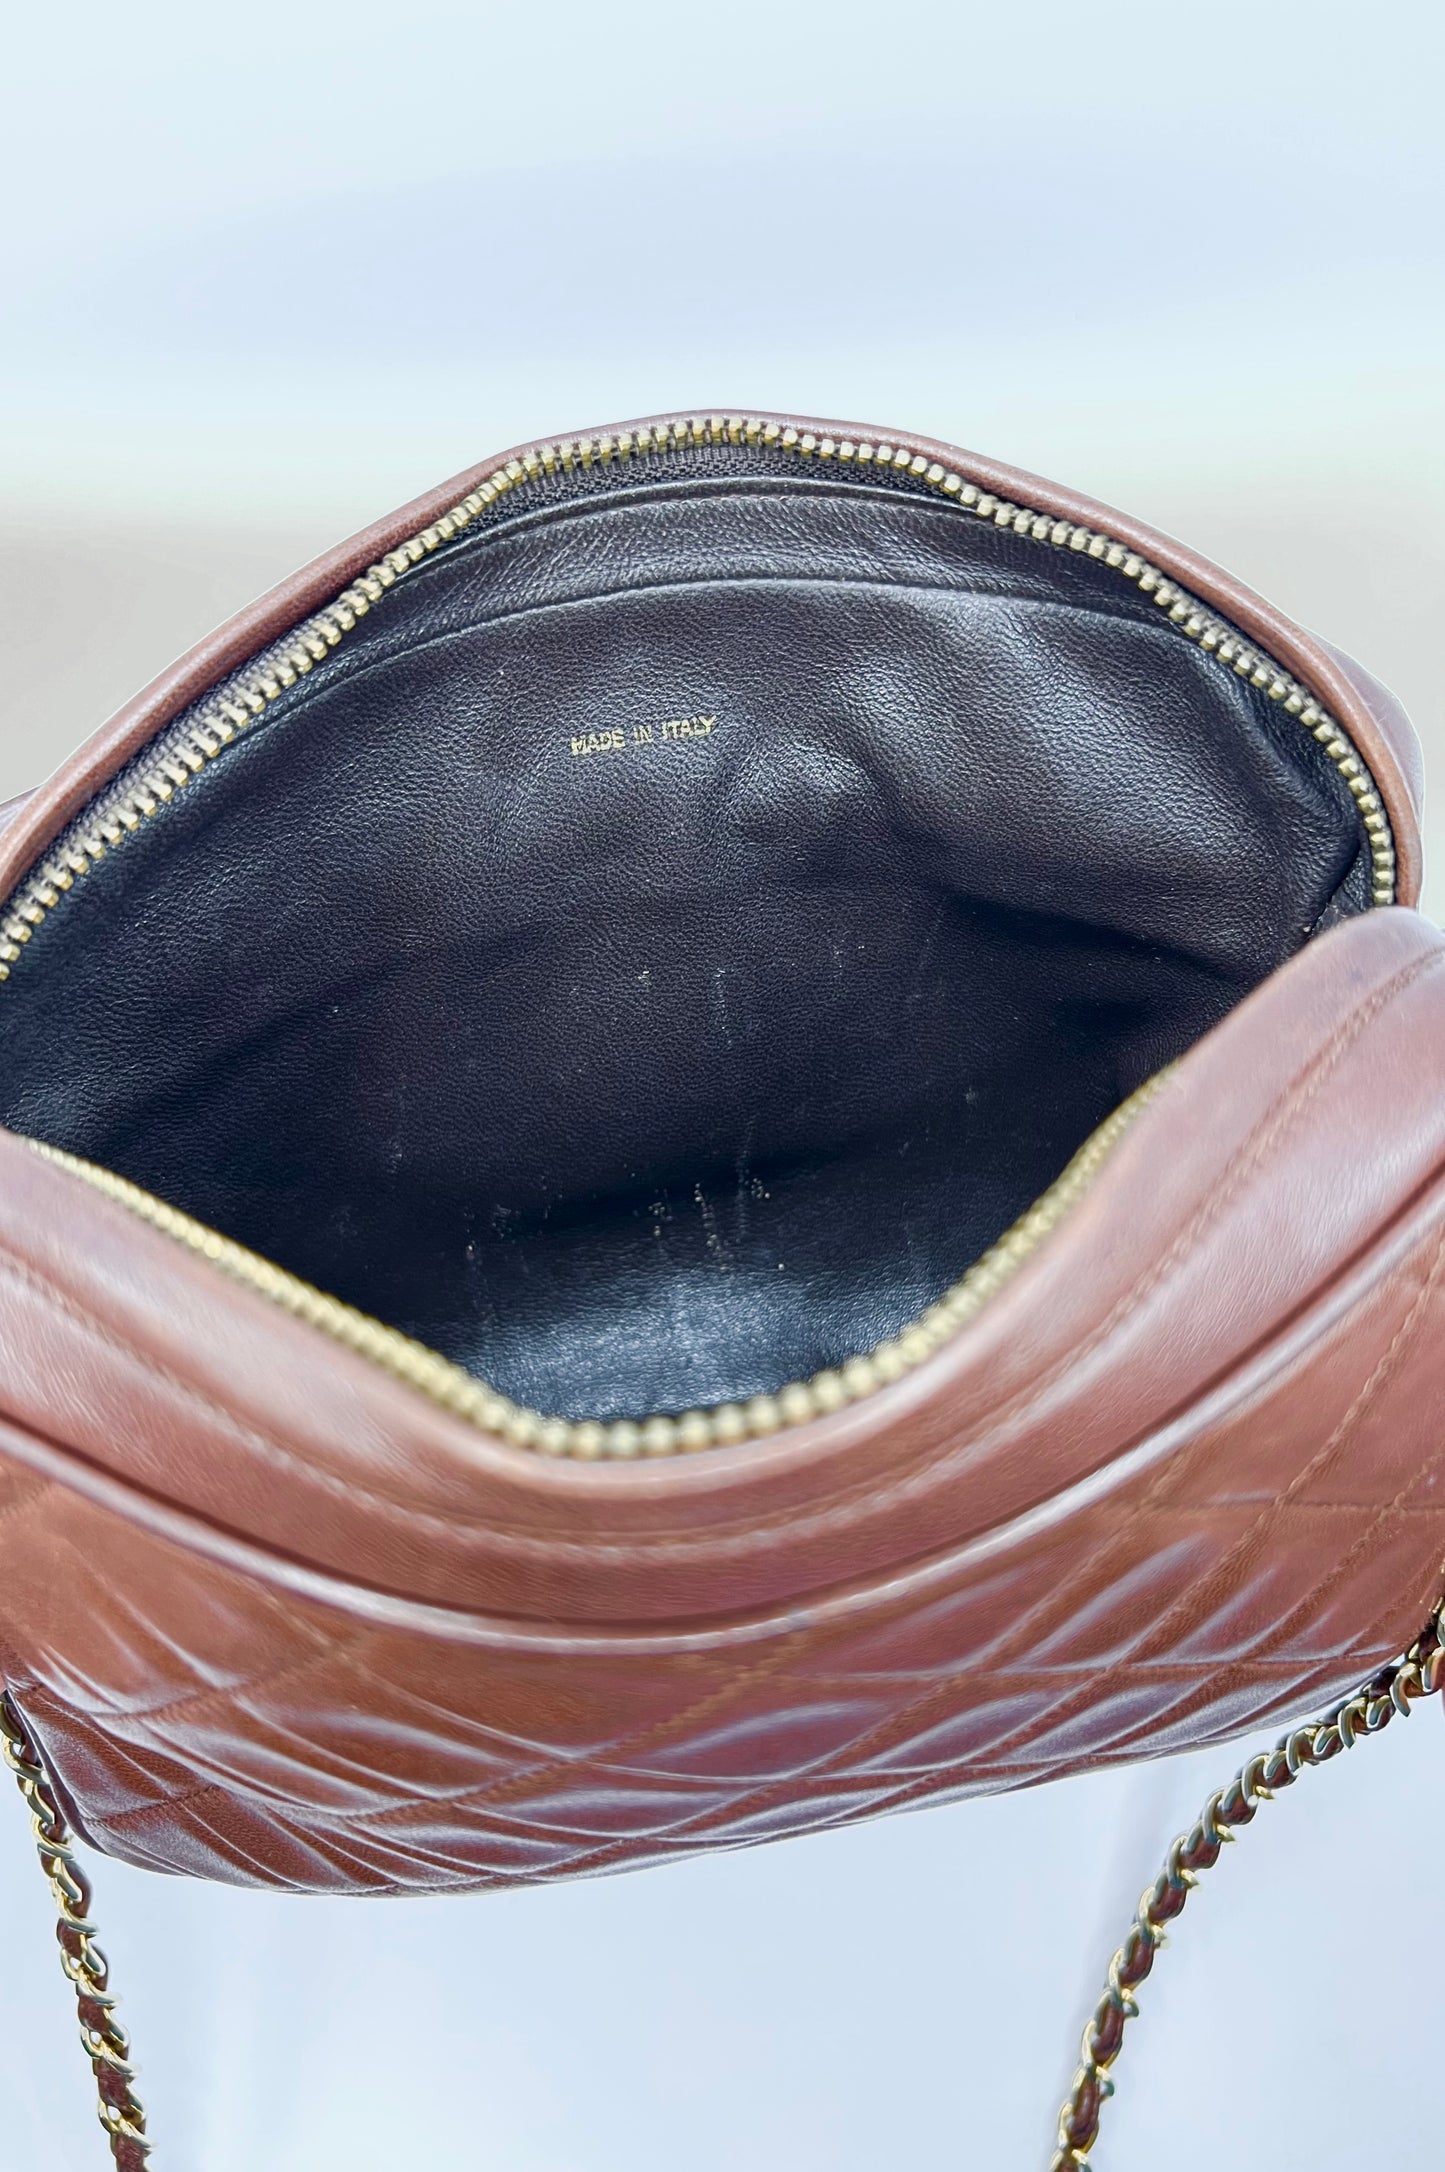 Vintage brown Chanel camera bag